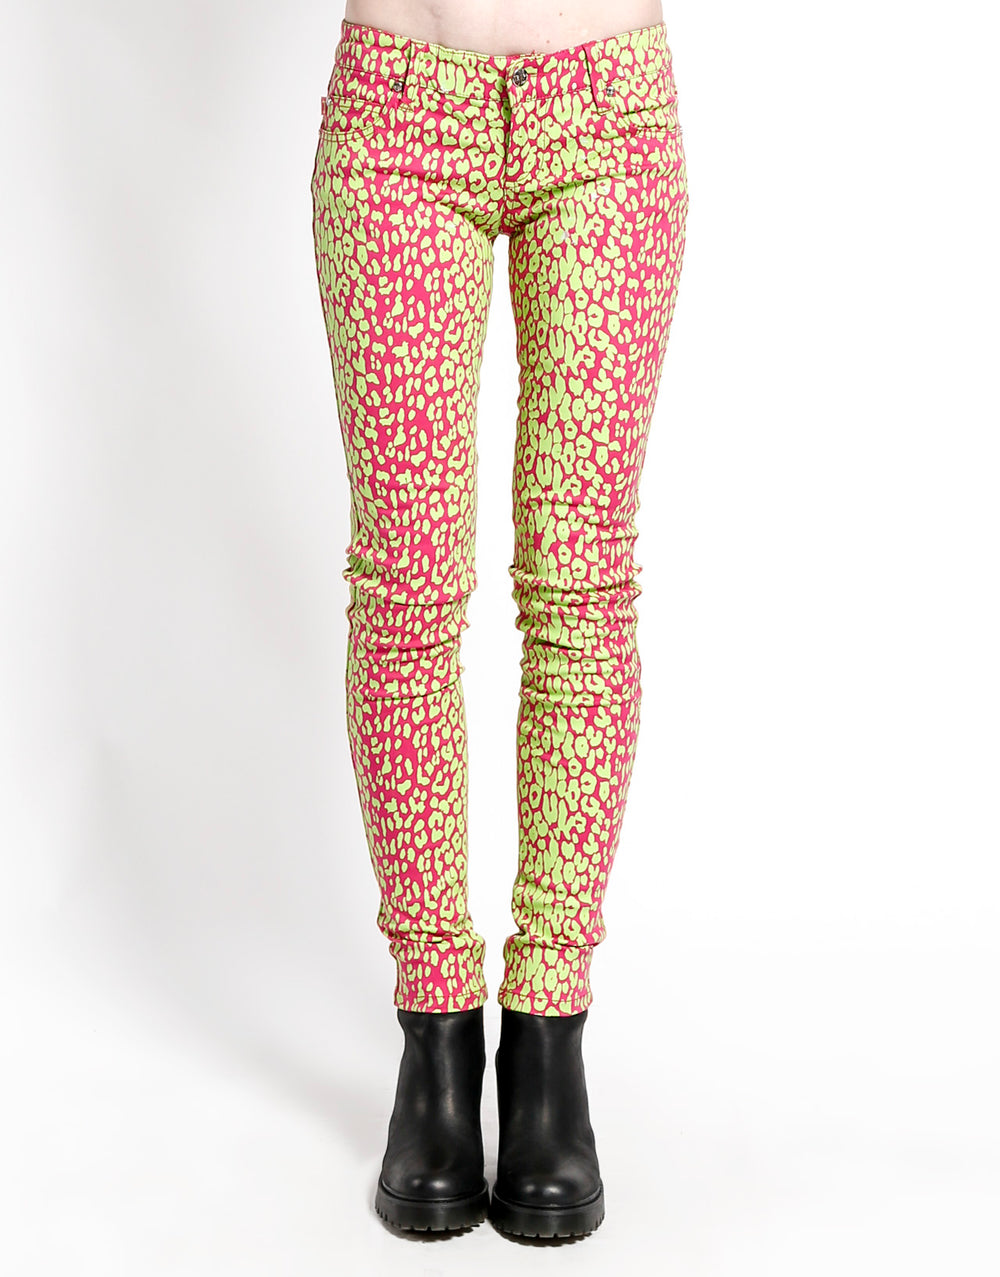 Denim Leggings with Pink Leopard Pattern - Its All Leggings